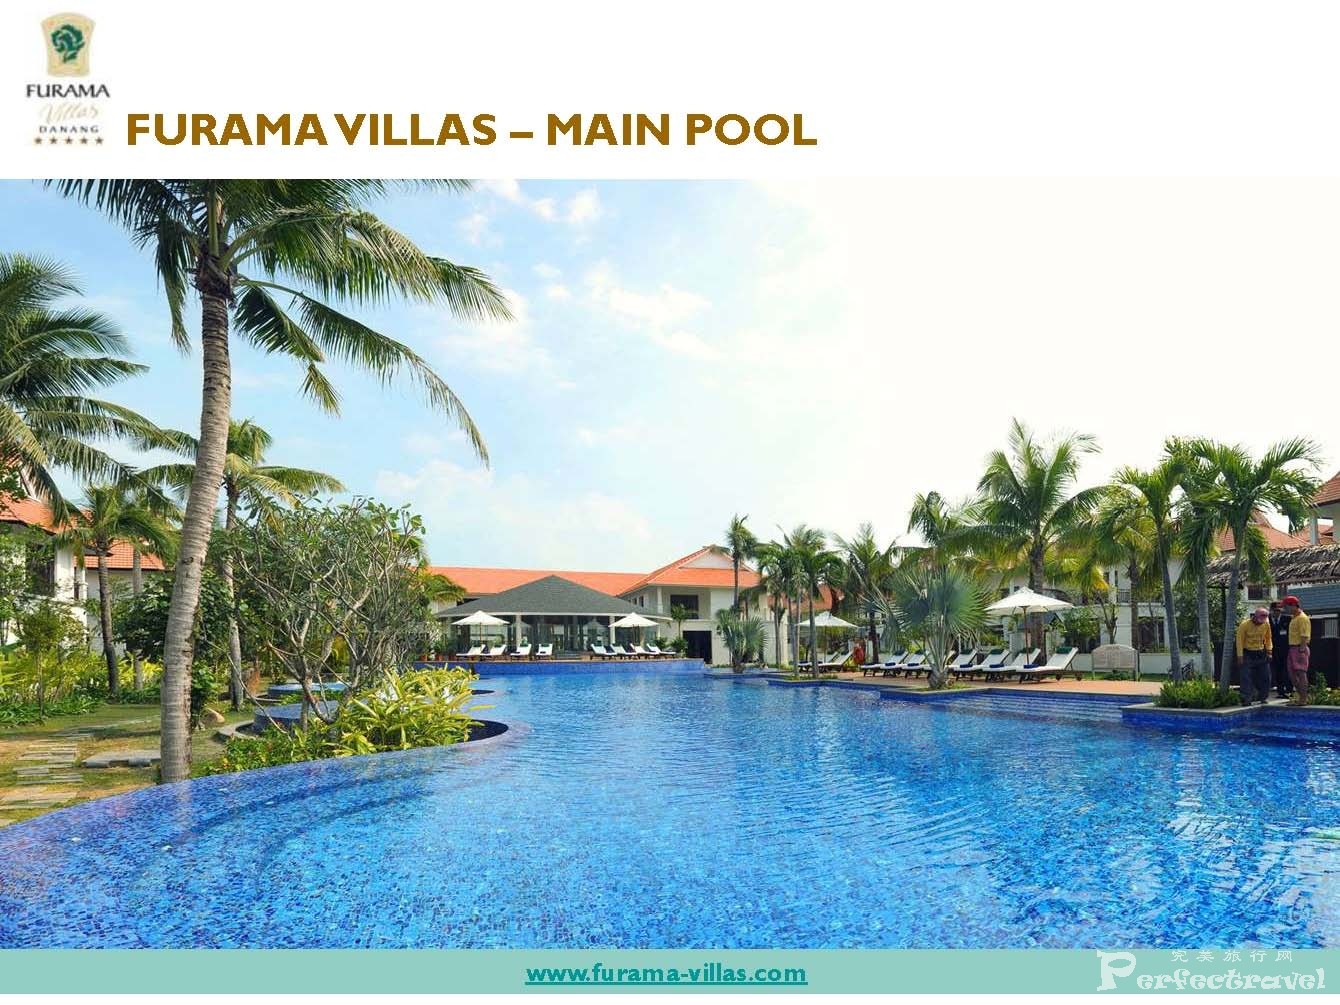 Furama Villas Presentation Fact sheet - updated 07.2015_Page_25.jpg